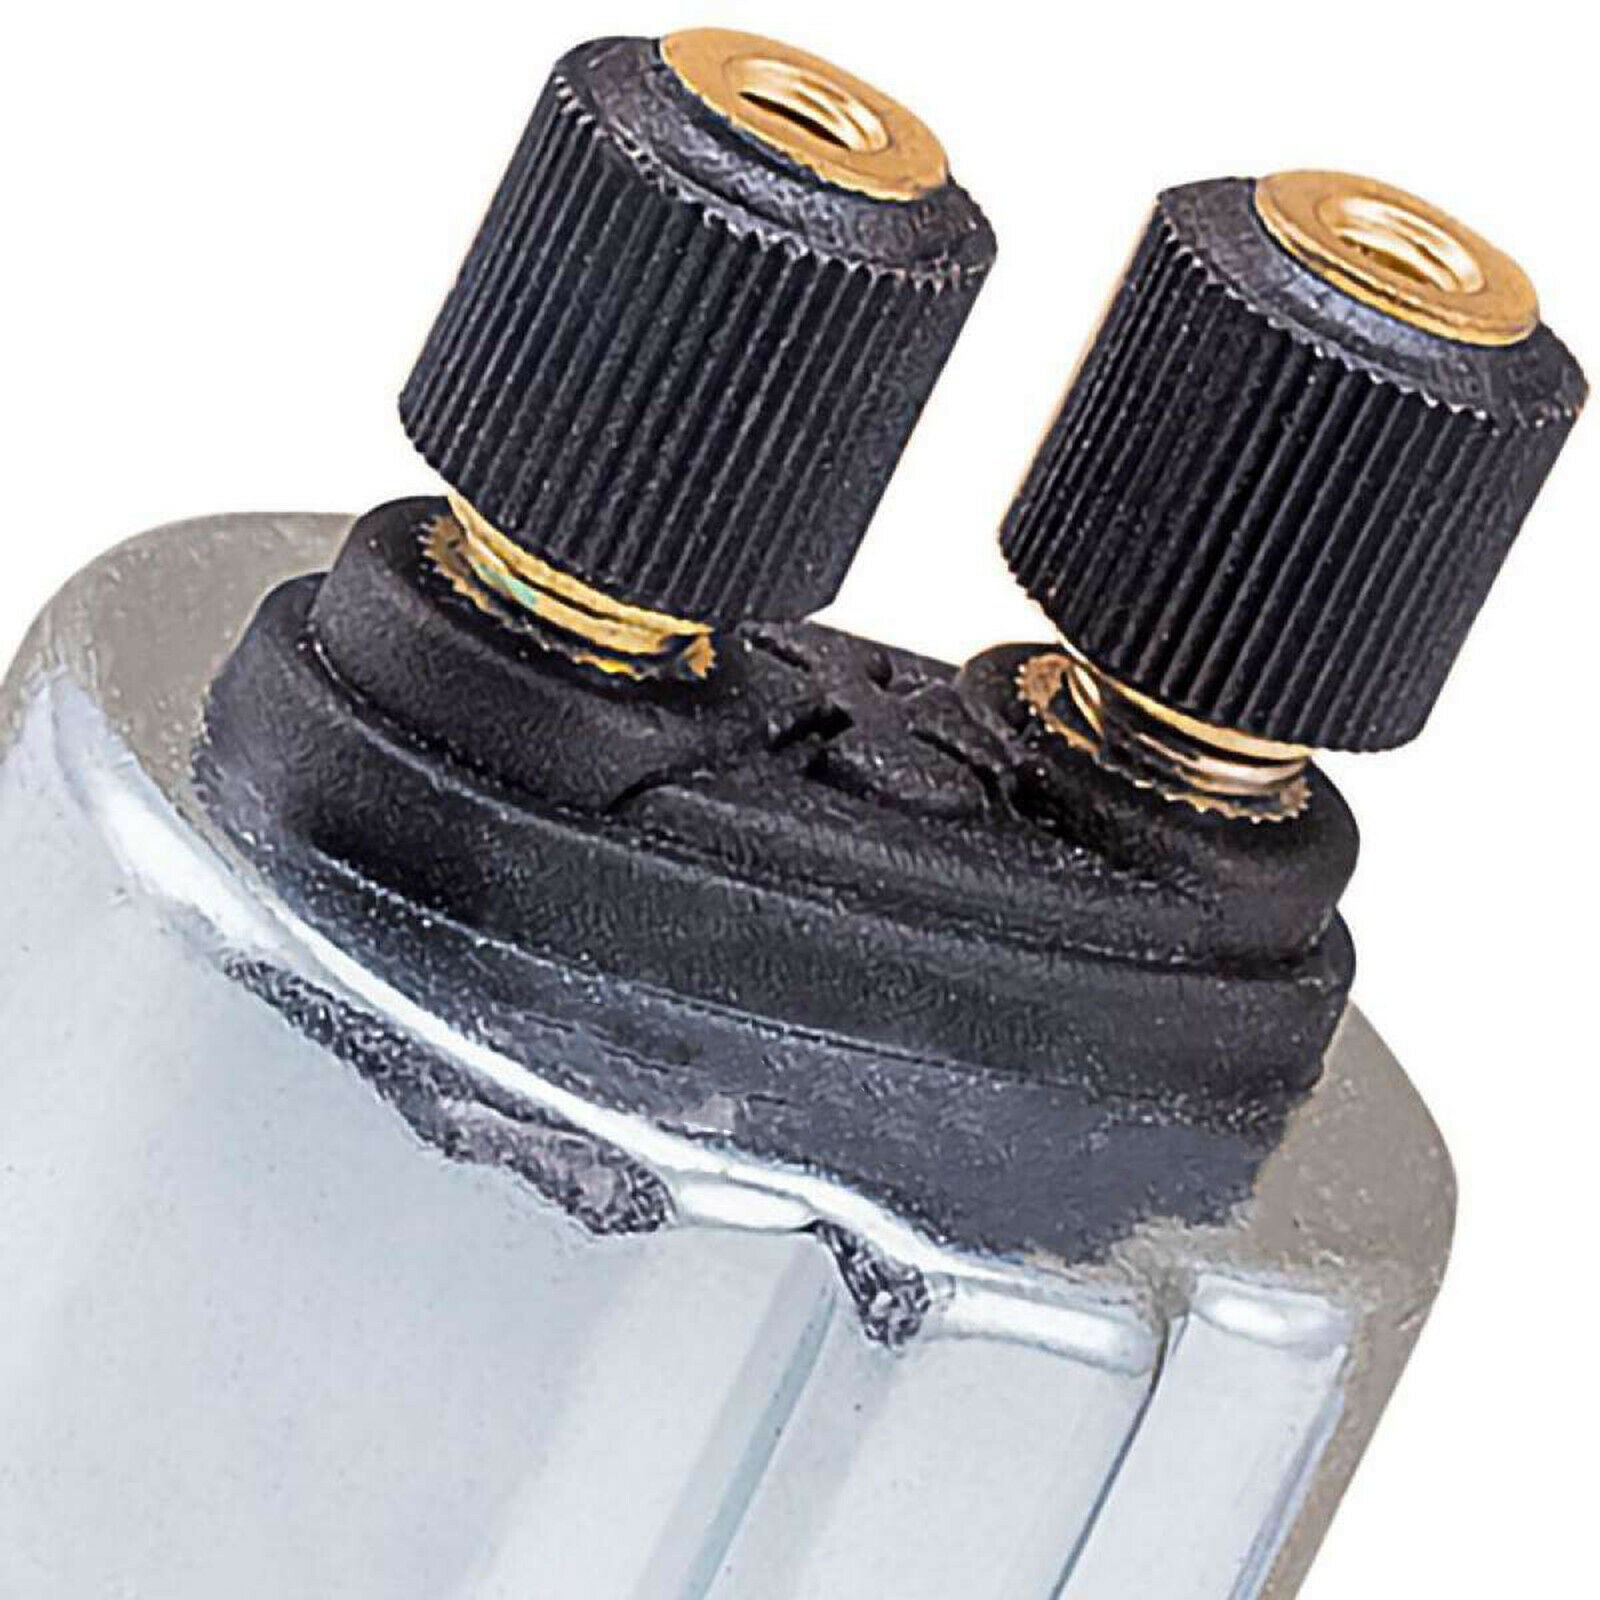 1PC VDO Engine Oil Pressure Sensor Sender Switch 0-150PSI 12-24Vdc 1/8NPT - Buymachineryparts